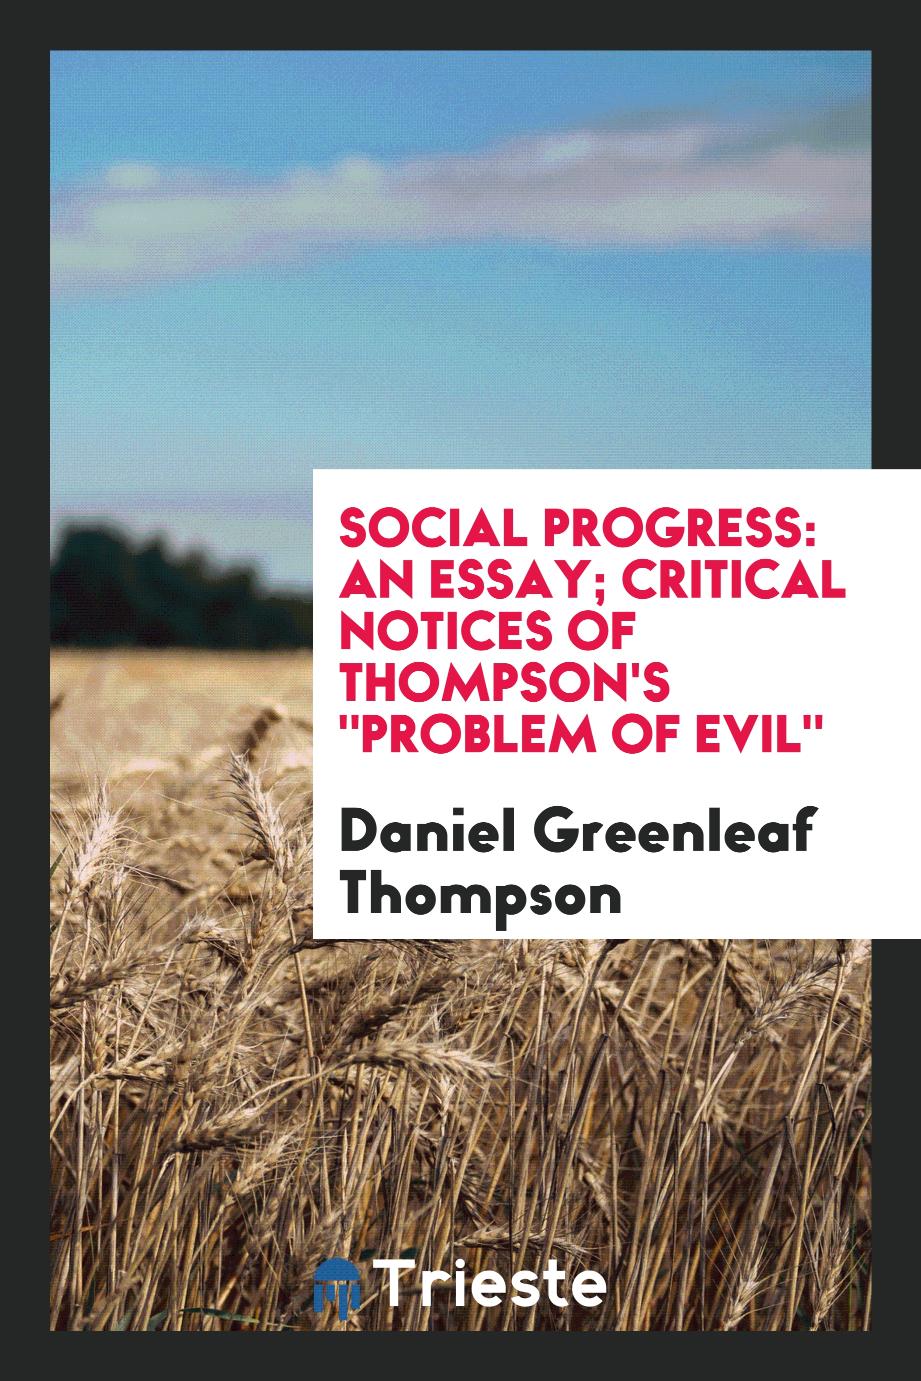 Social progress: an essay; Critical Notices of Thompson's "problem of evil"